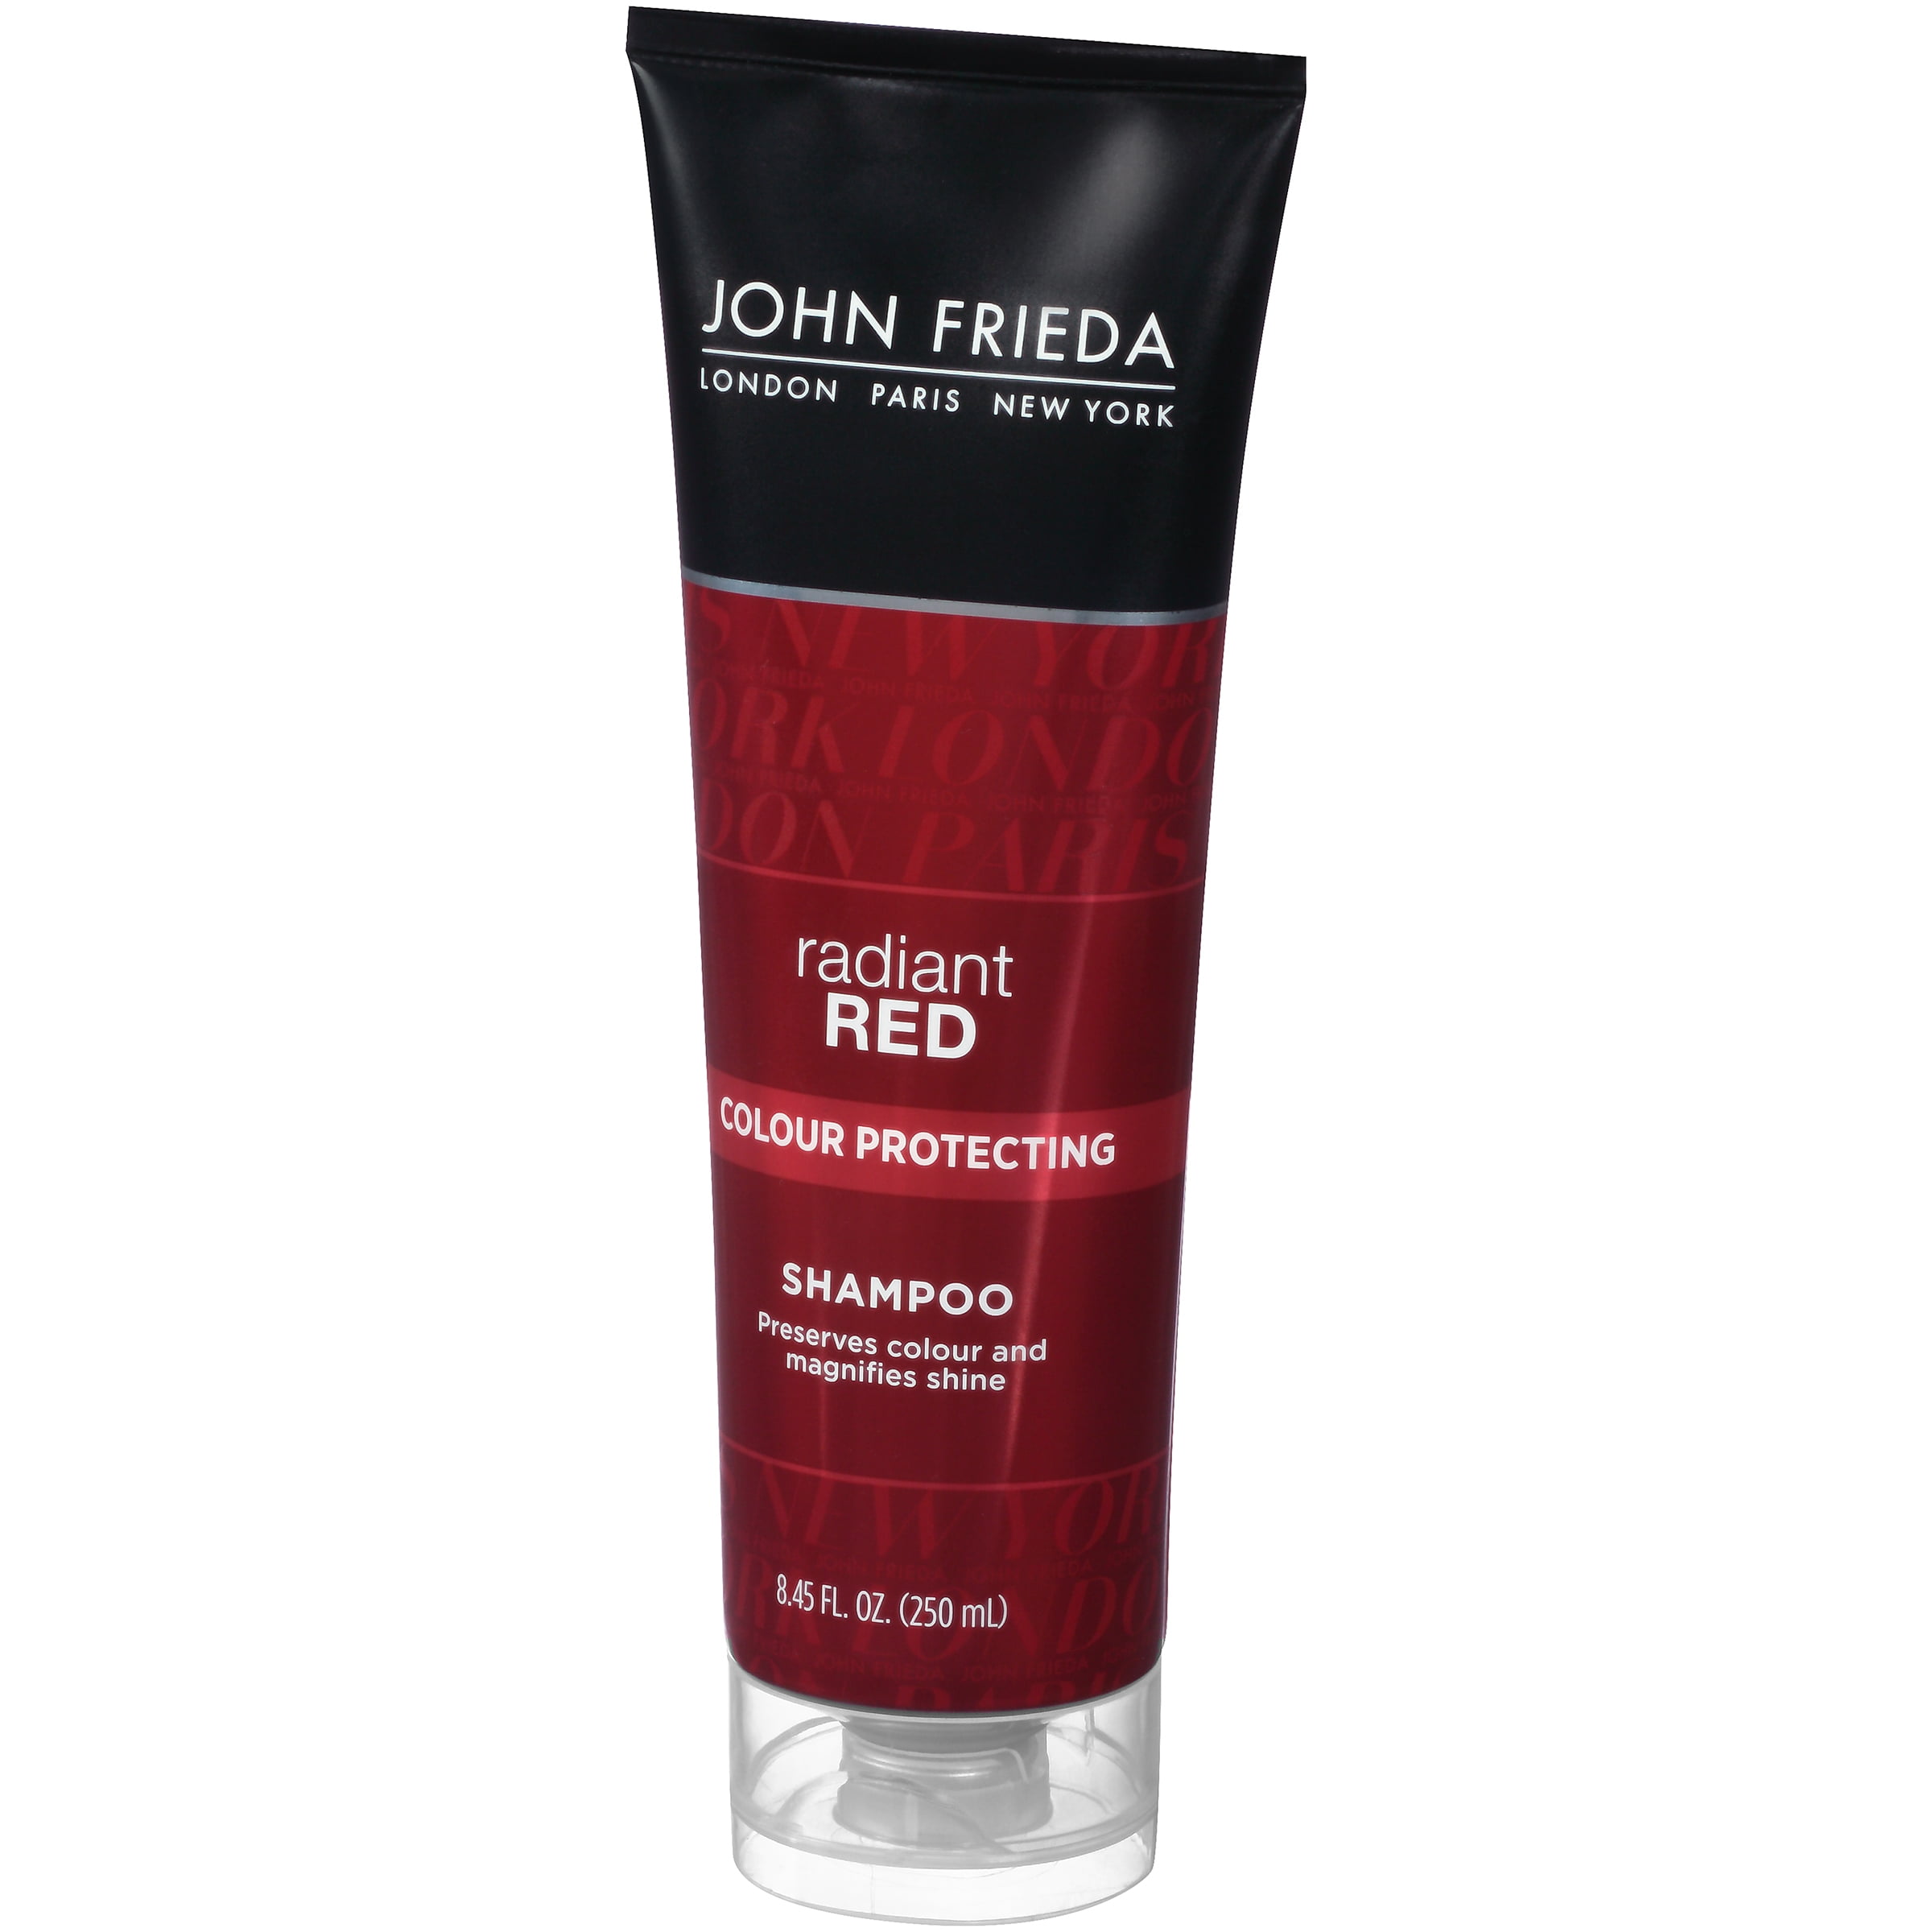 John Frieda Radiant Red Colour Protecting Shampoo 845 Oz